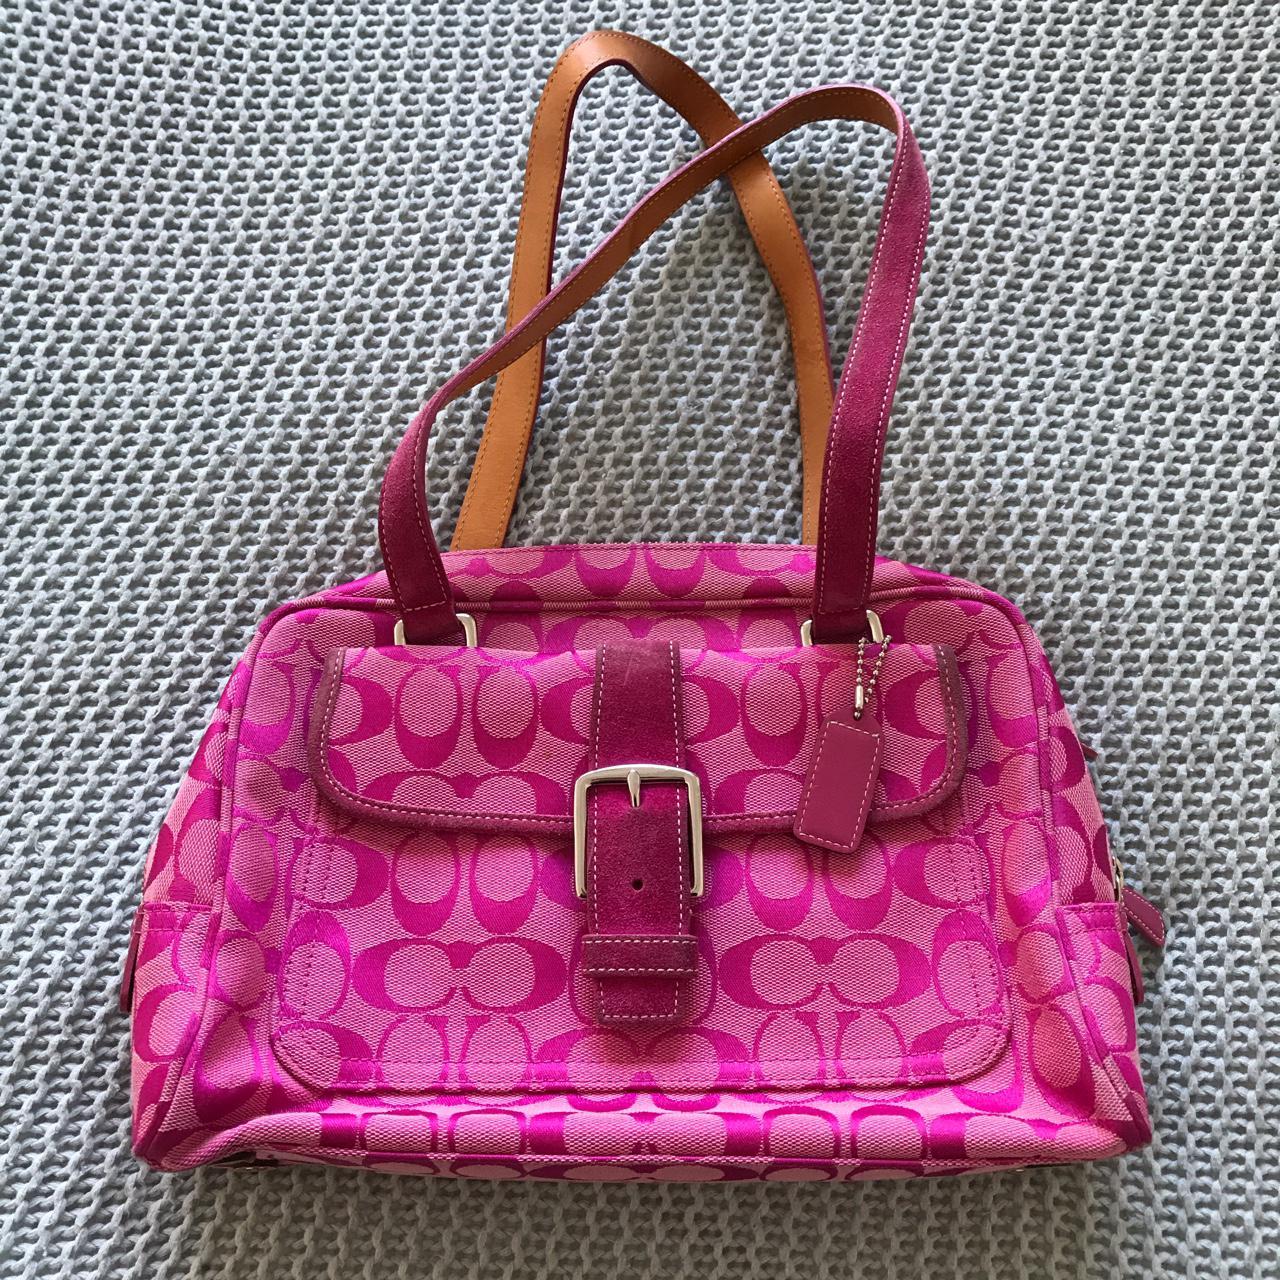 Hot Pink Coach Bag - Shop on Pinterest